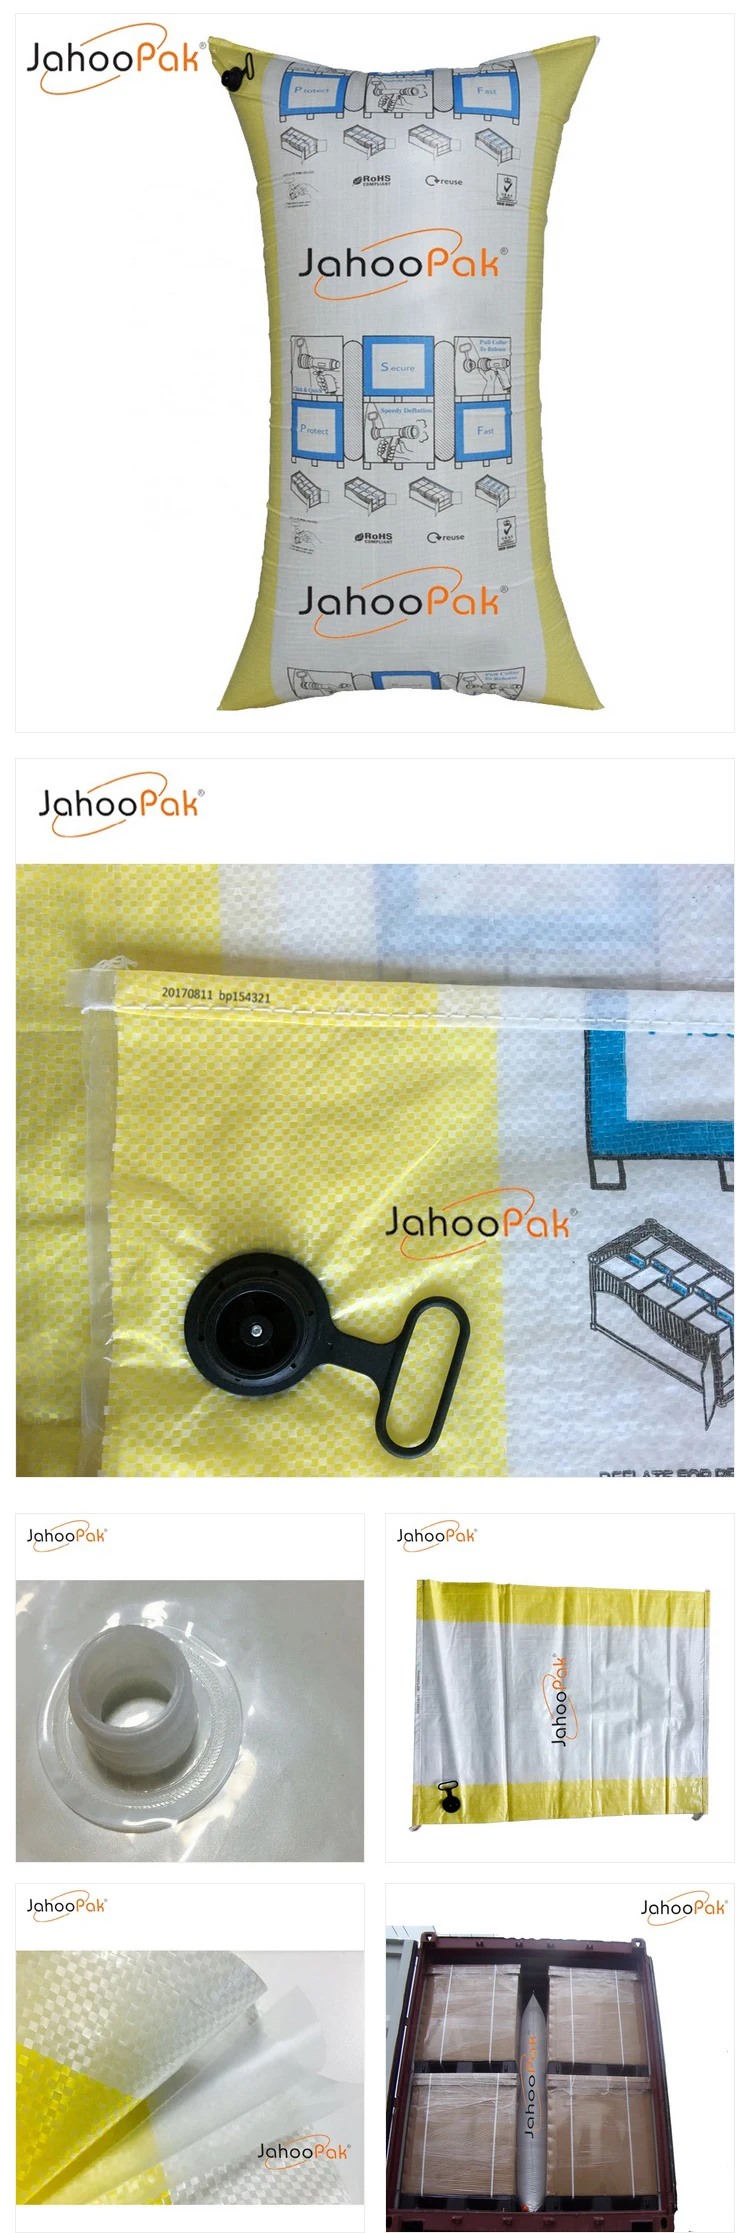 JahooPak Dunnage Bag (1).jpg